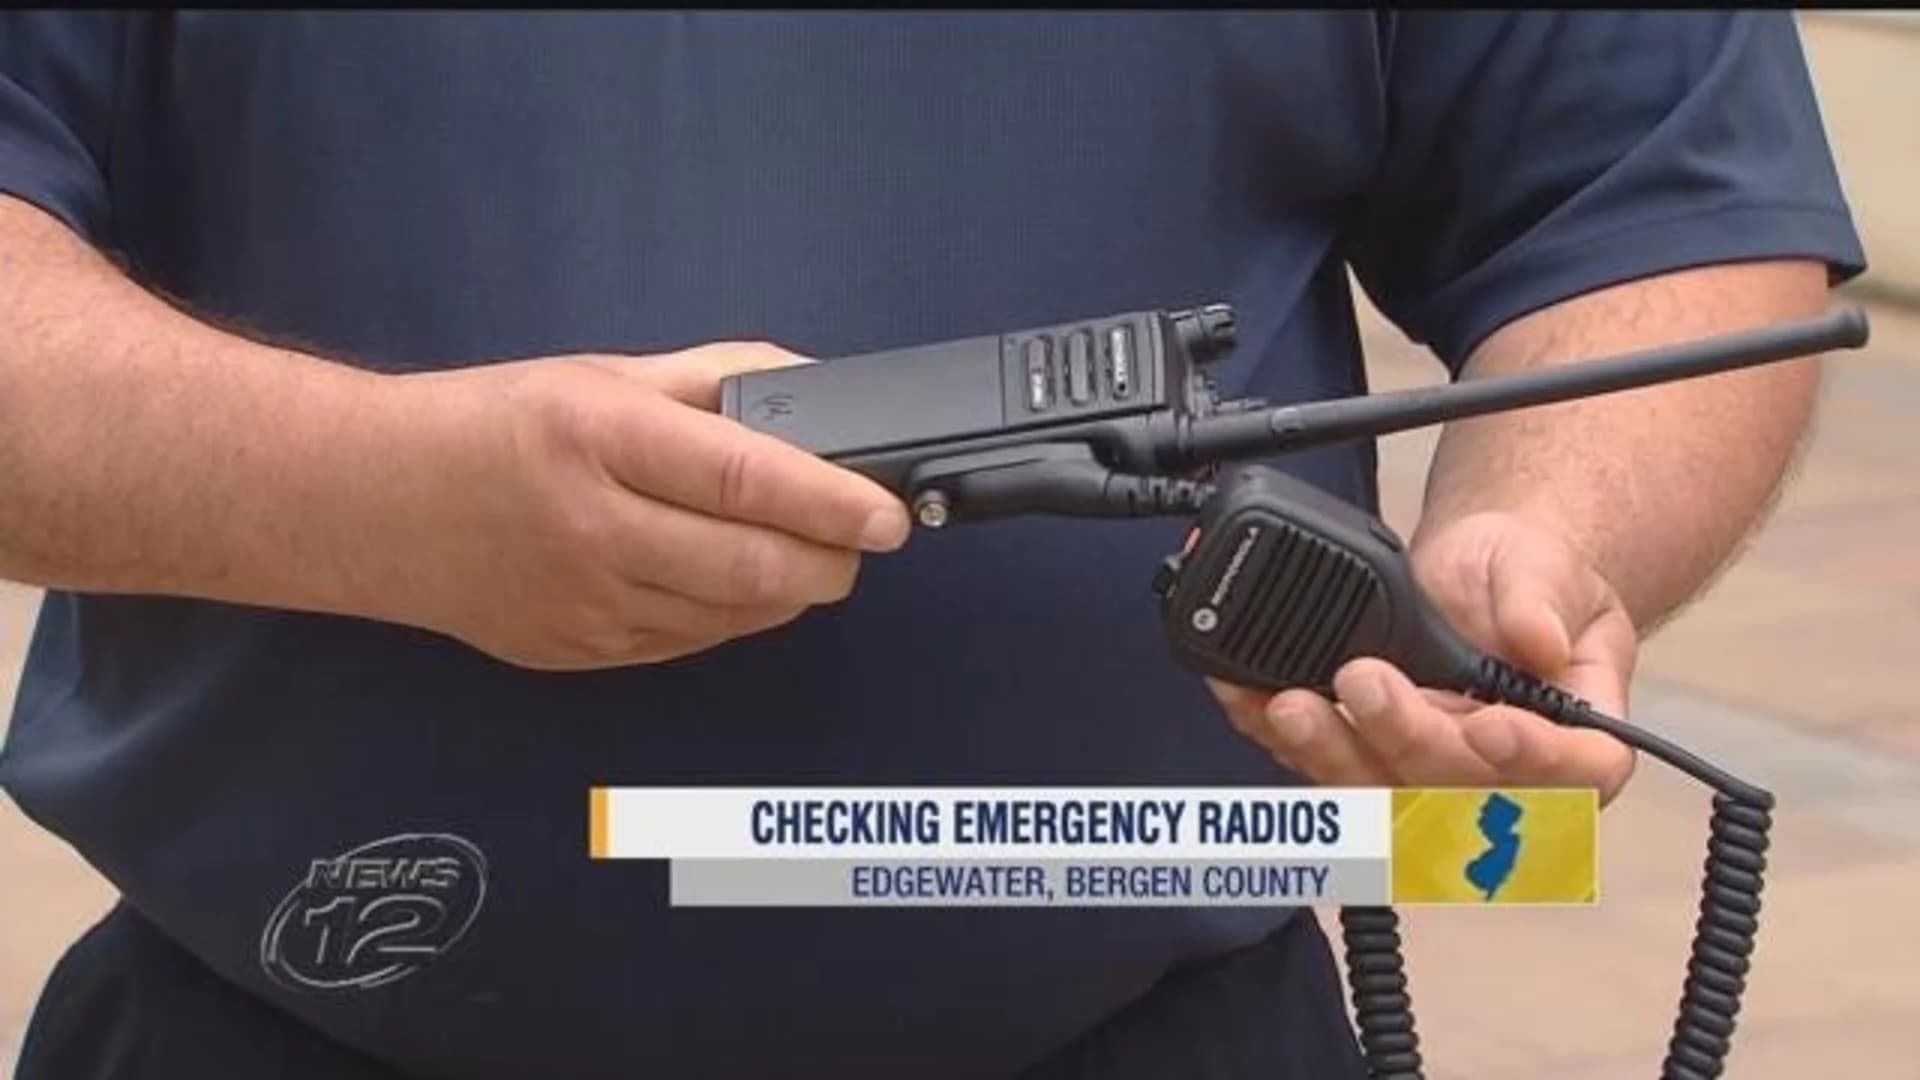 Officials work to fix blocked emergency radio signals